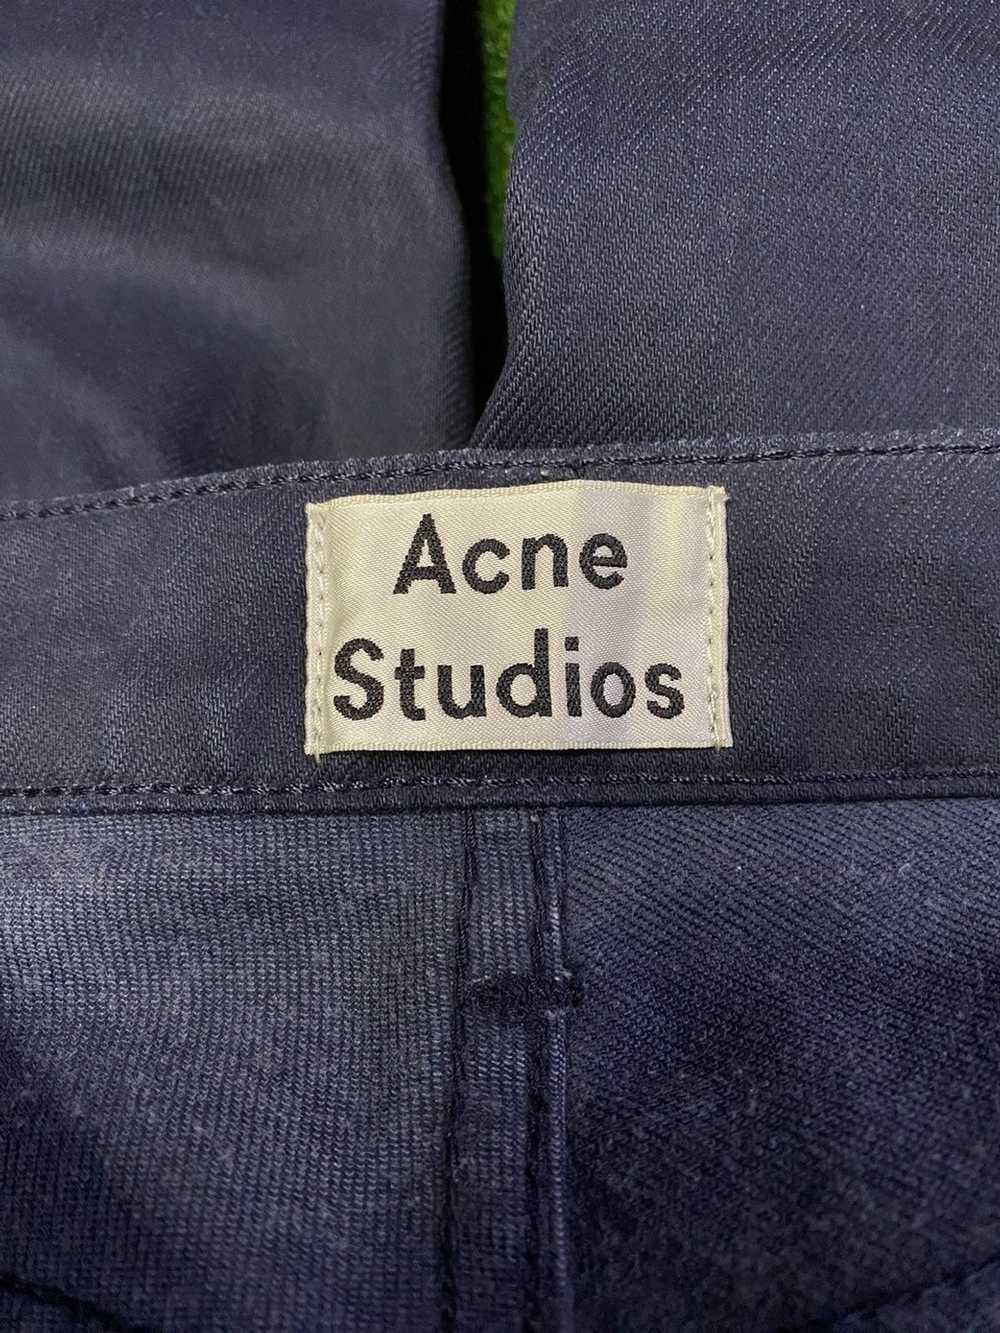 Acne Studios Acne Studios Twilight Patti Jeans - image 5